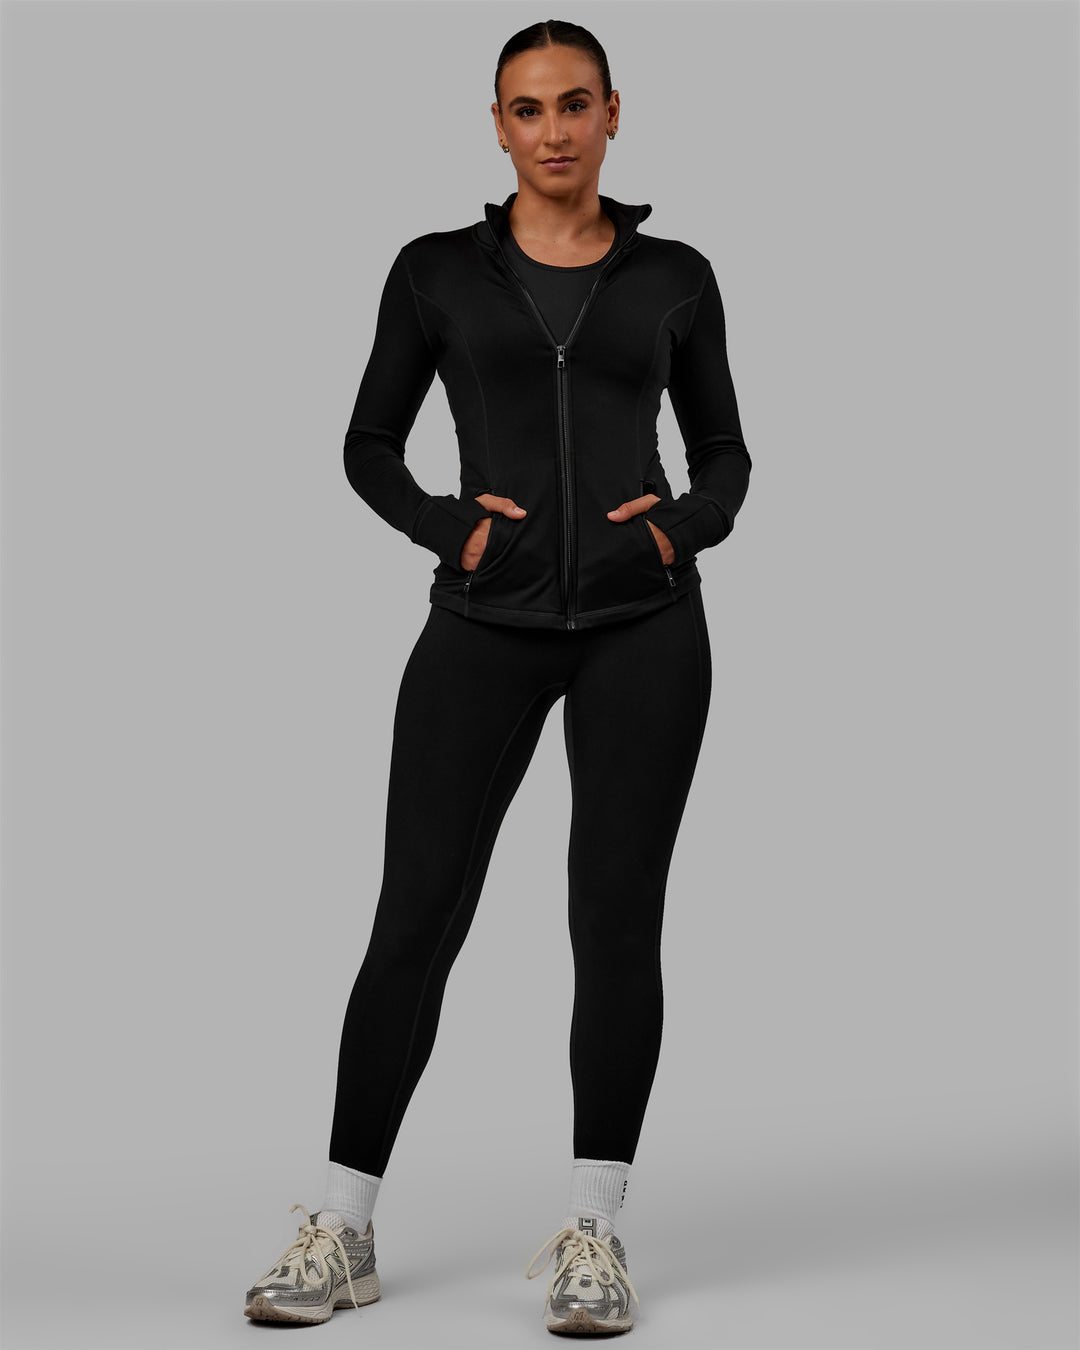 Woman wearing Motion Full Length Thermal Leggings - Black